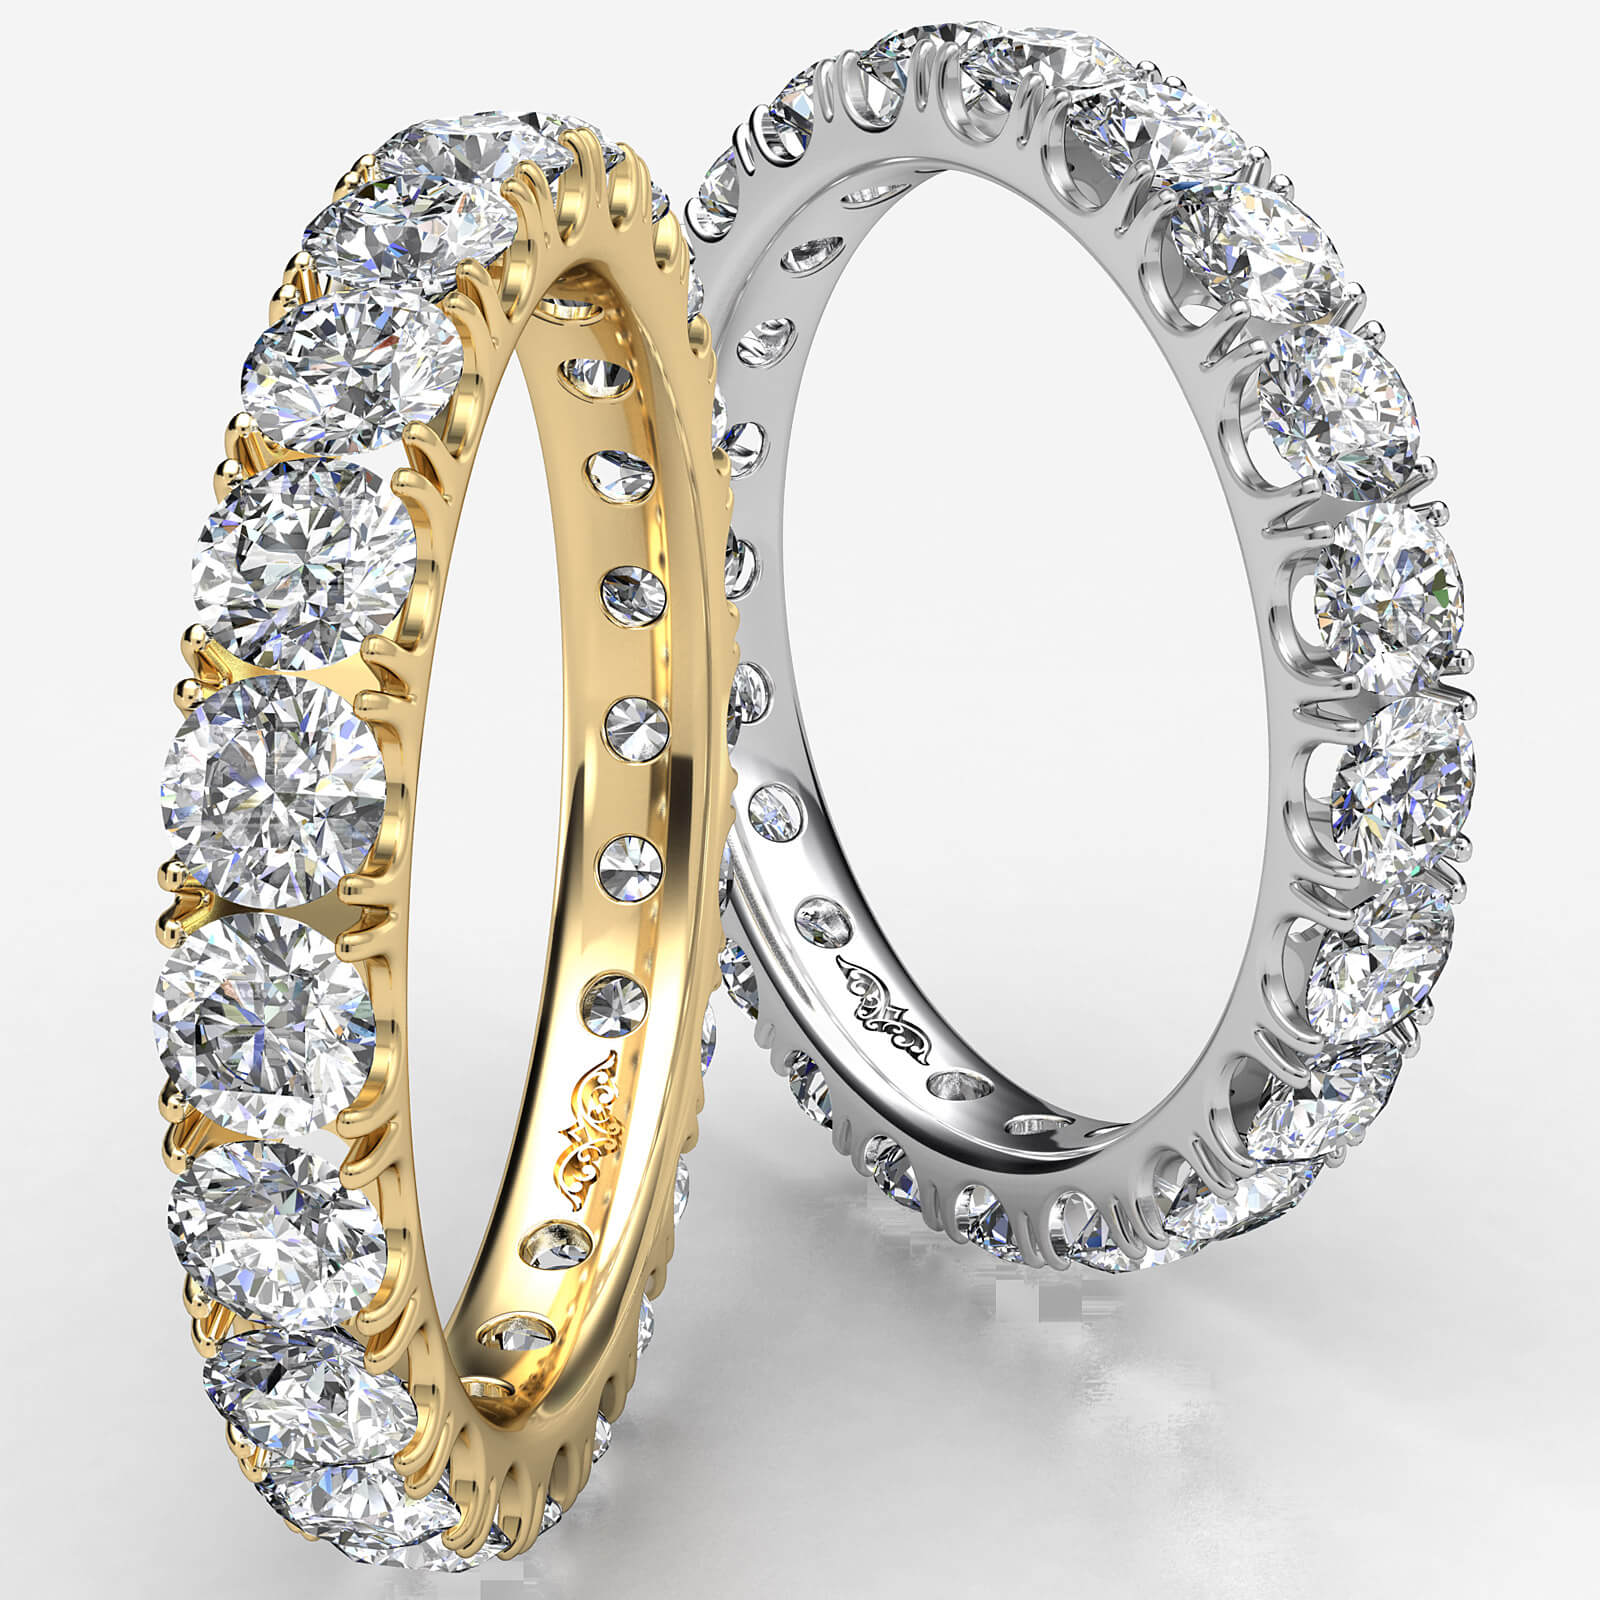 Vintage Art Deco Engagement Bridal Ring 2.95Ct Round Diamond 14K White Gold Over